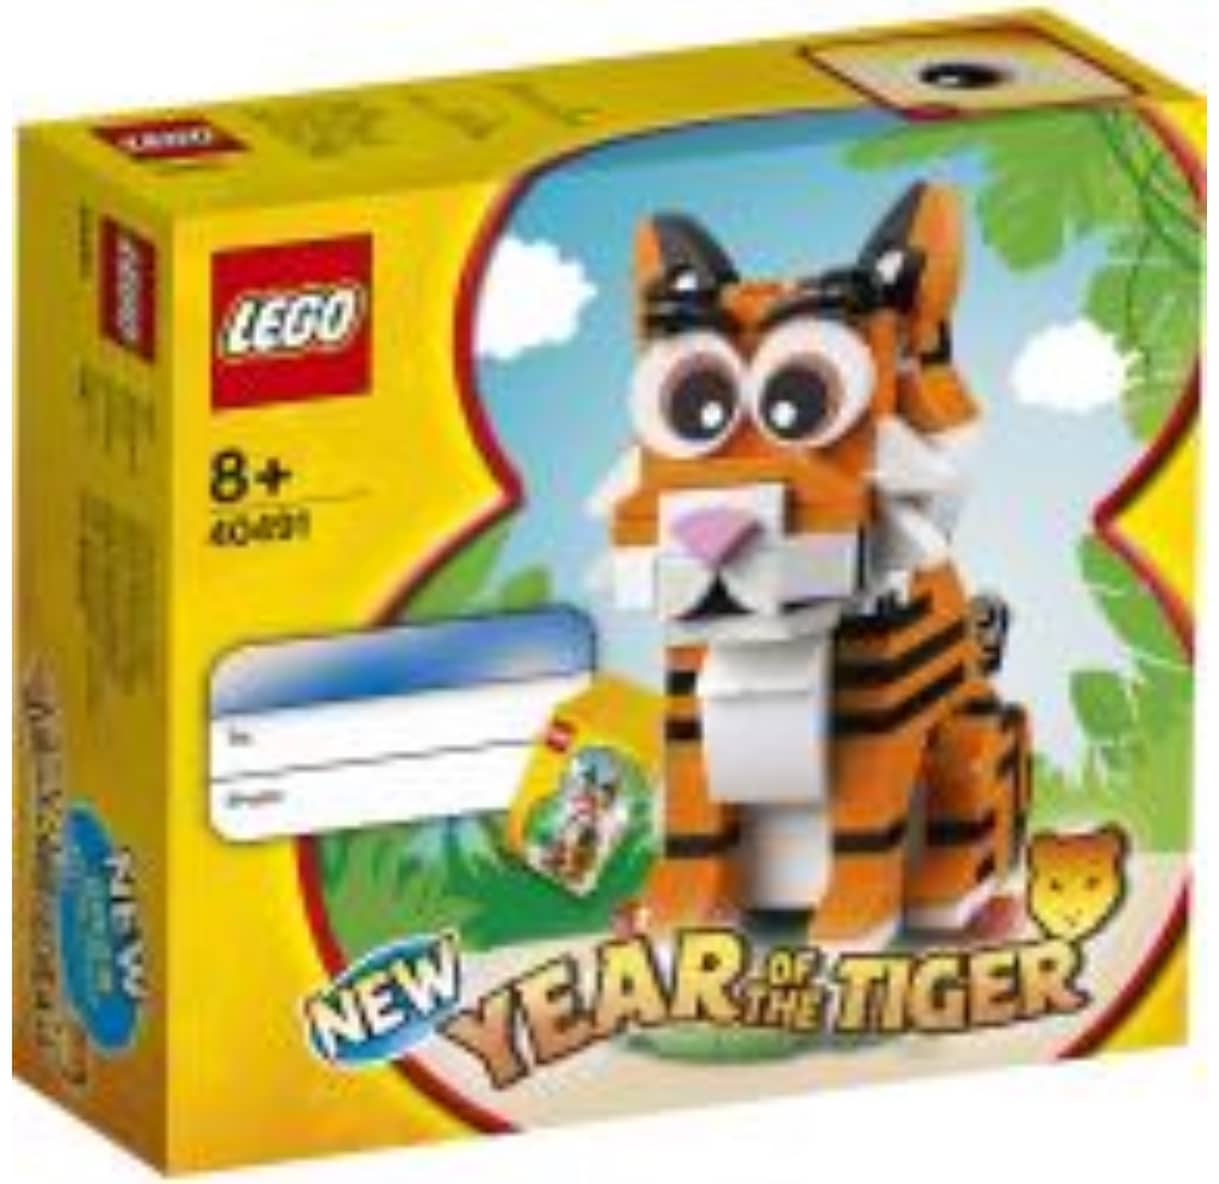 LEGO 40491 Jahr des Tigers